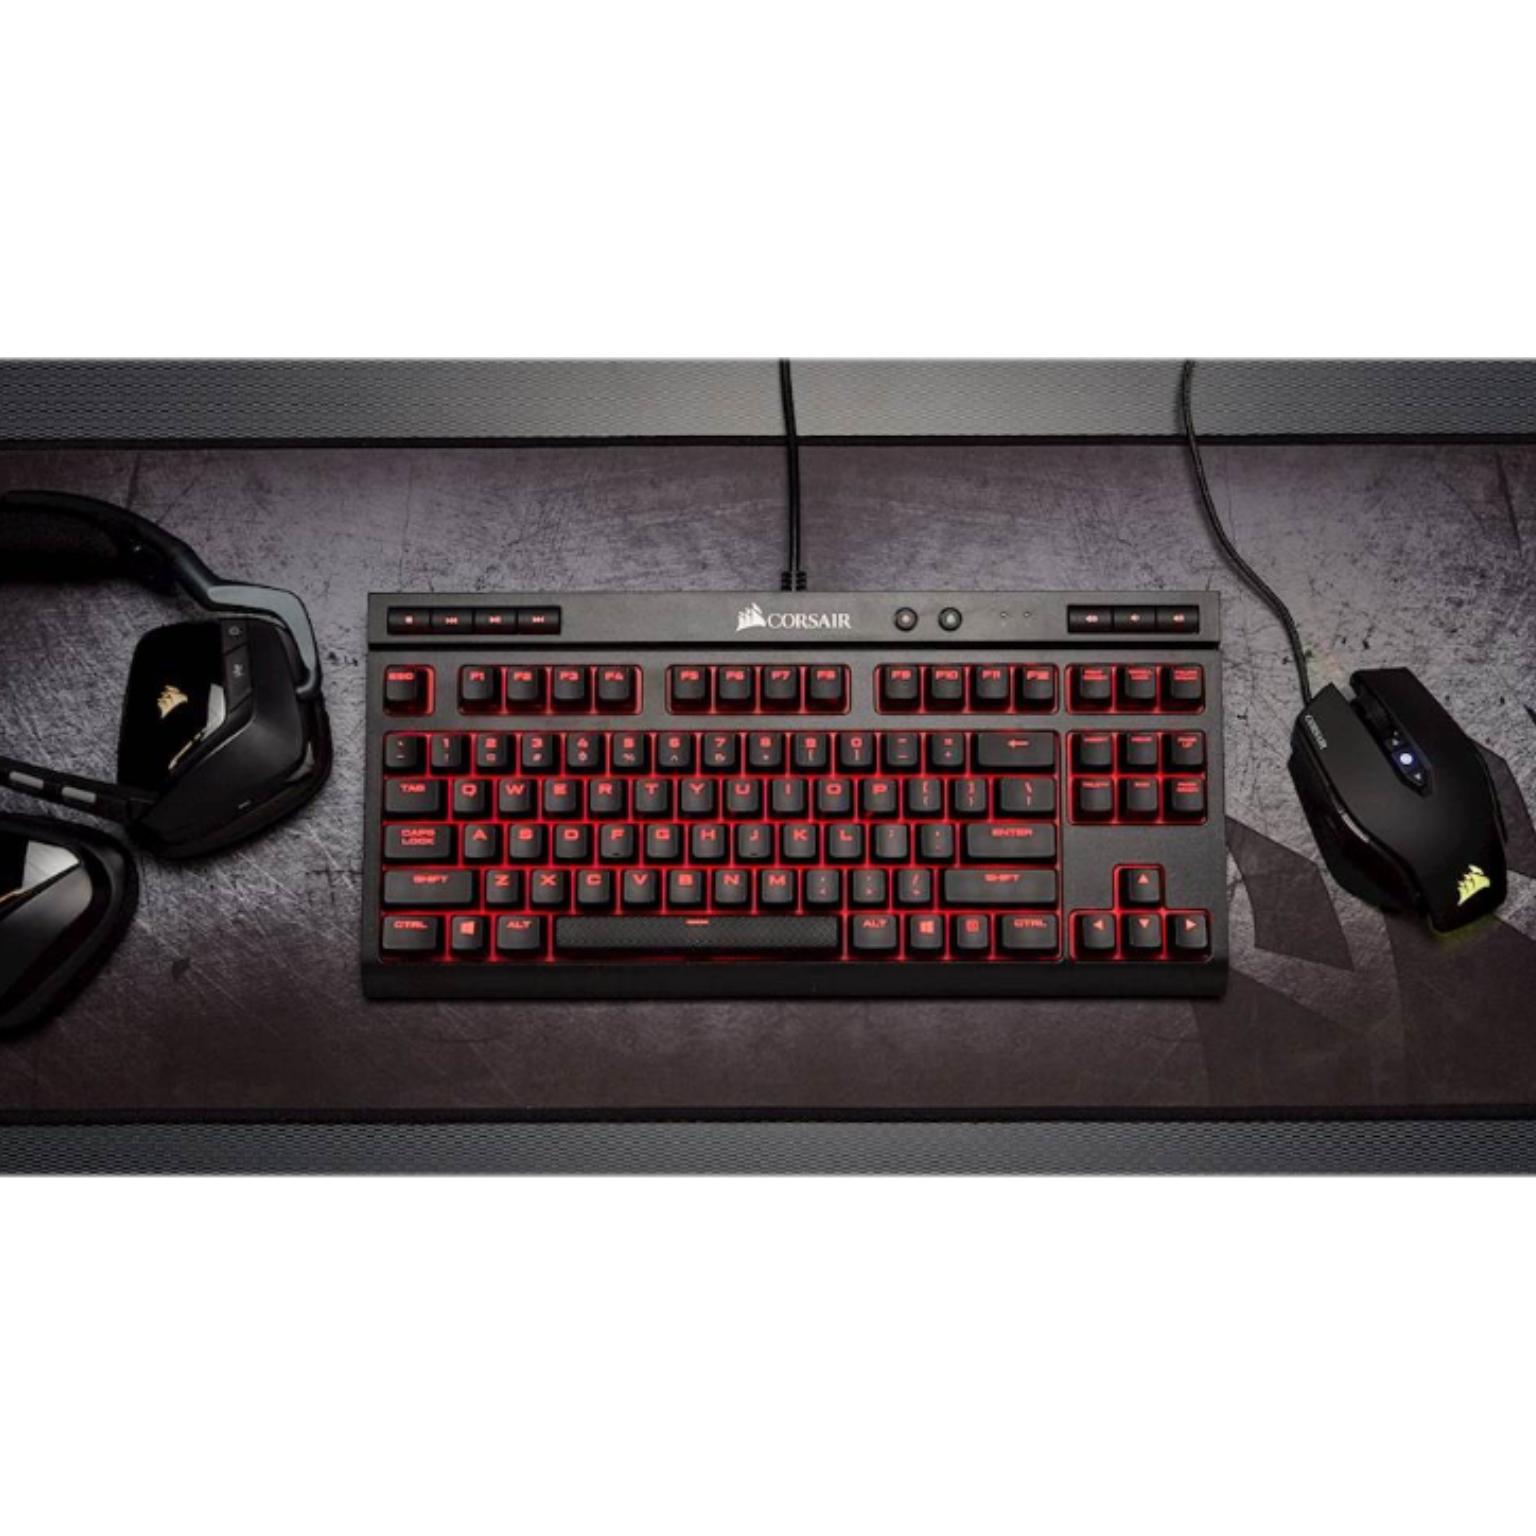 Bedraad gaming toetsenbord - - Merk: Corsair K63 compact, Indeling: QWERTY - Cherry Red, Aansluiting: Bedraad USB, Extra: 1.8m.